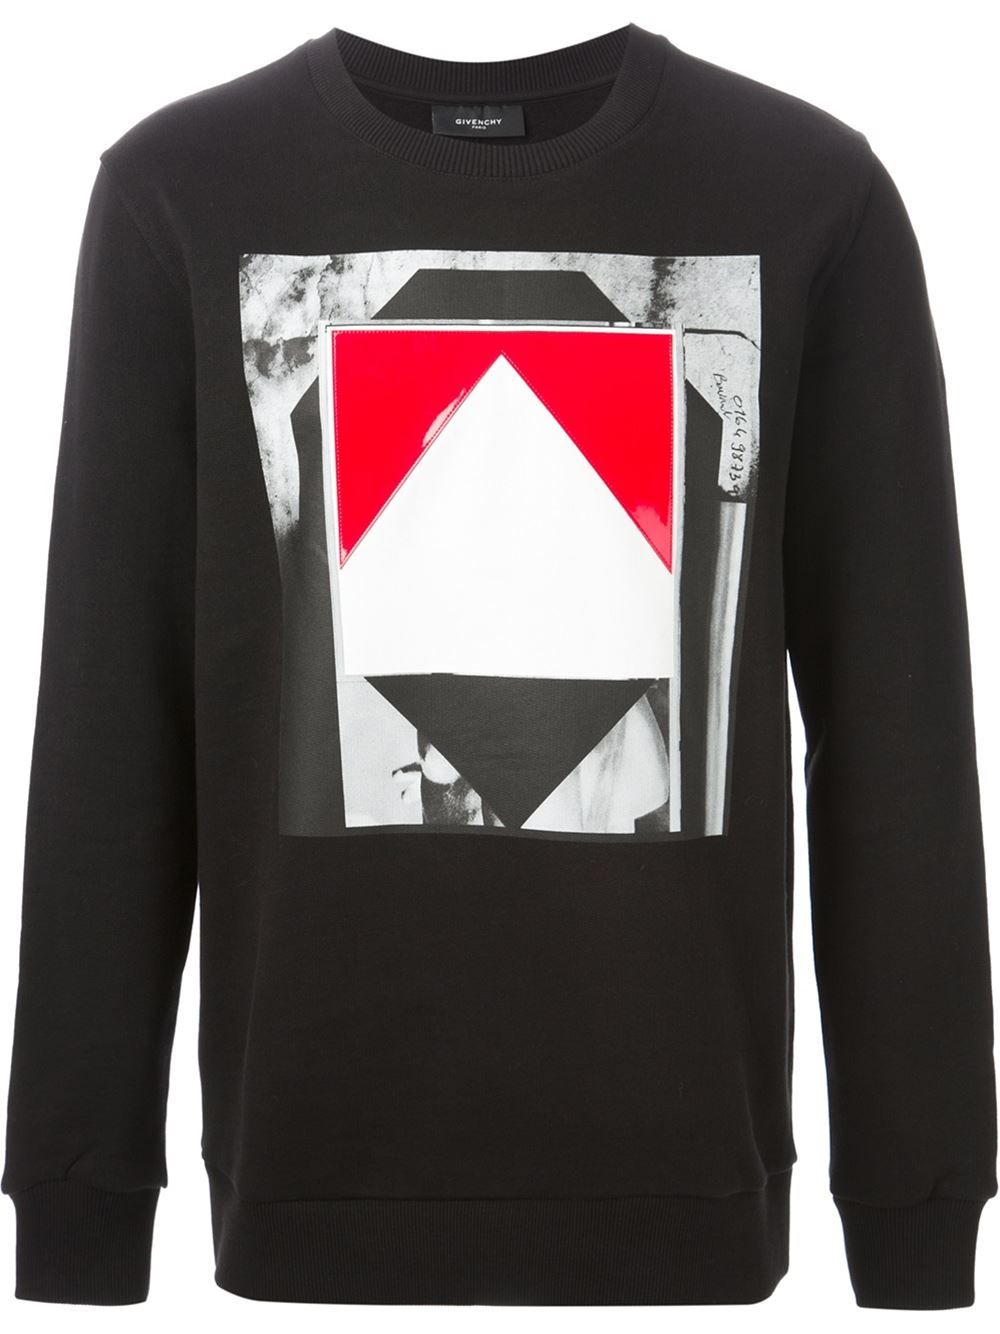 Lyst - Givenchy Geometric Panel Sweatshirt in Black for Men